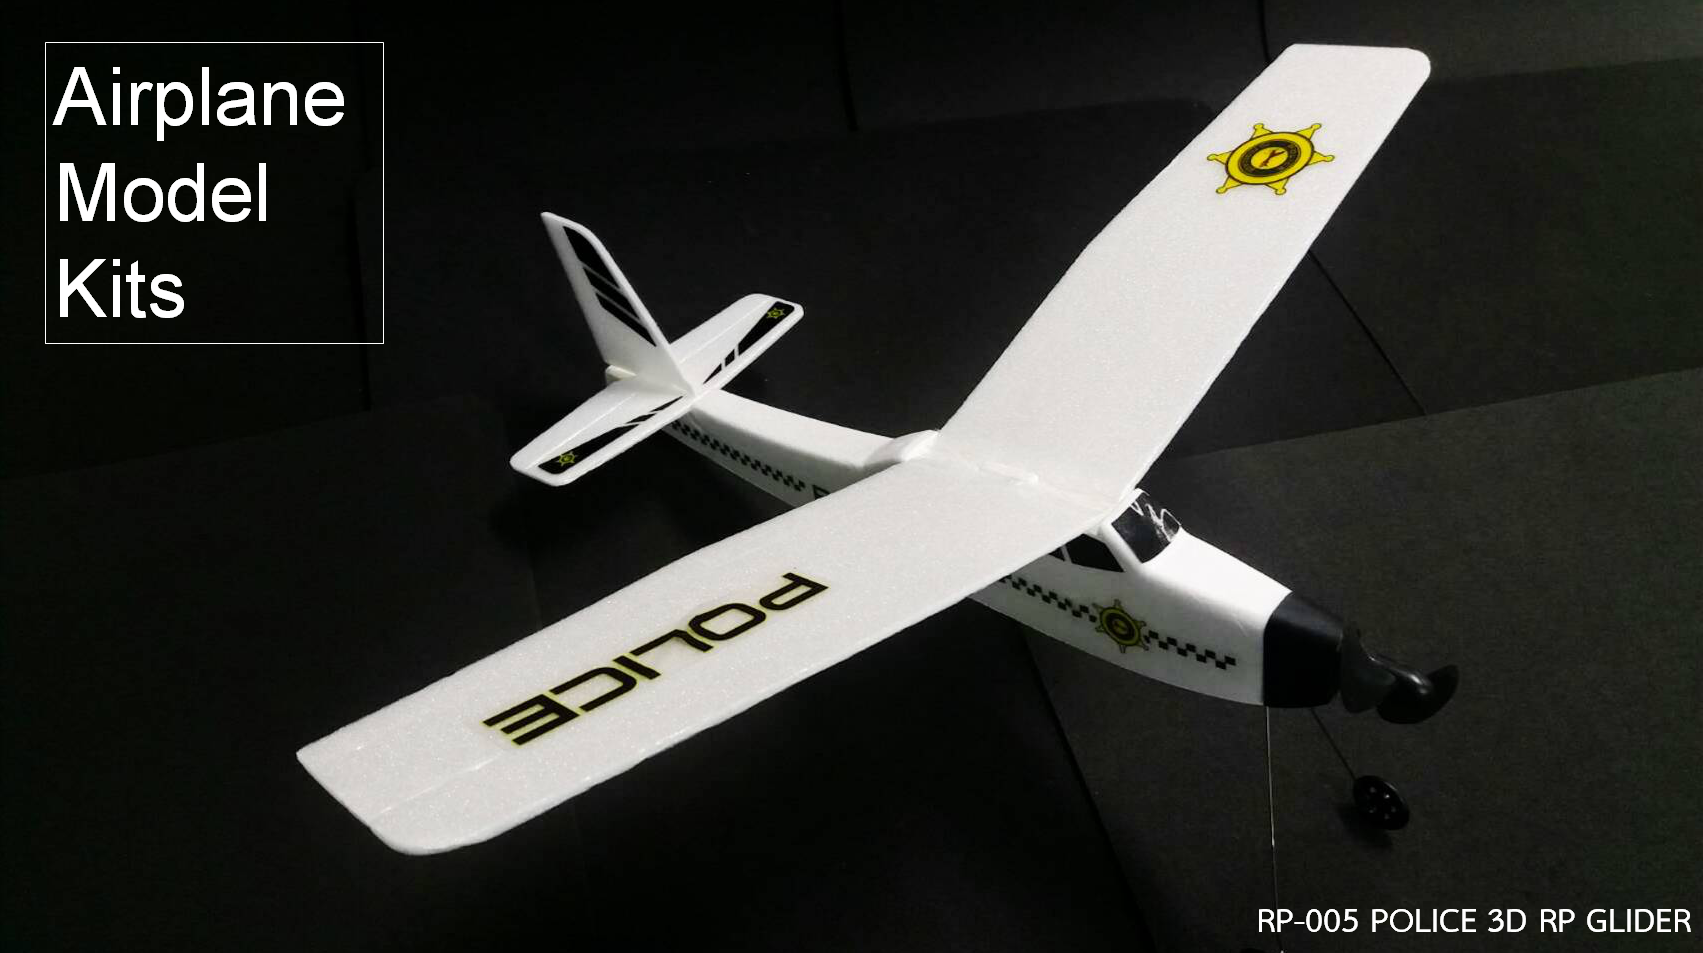 RP-005 เครื่องบินพลังหนังยาง Police 3D RP Glider